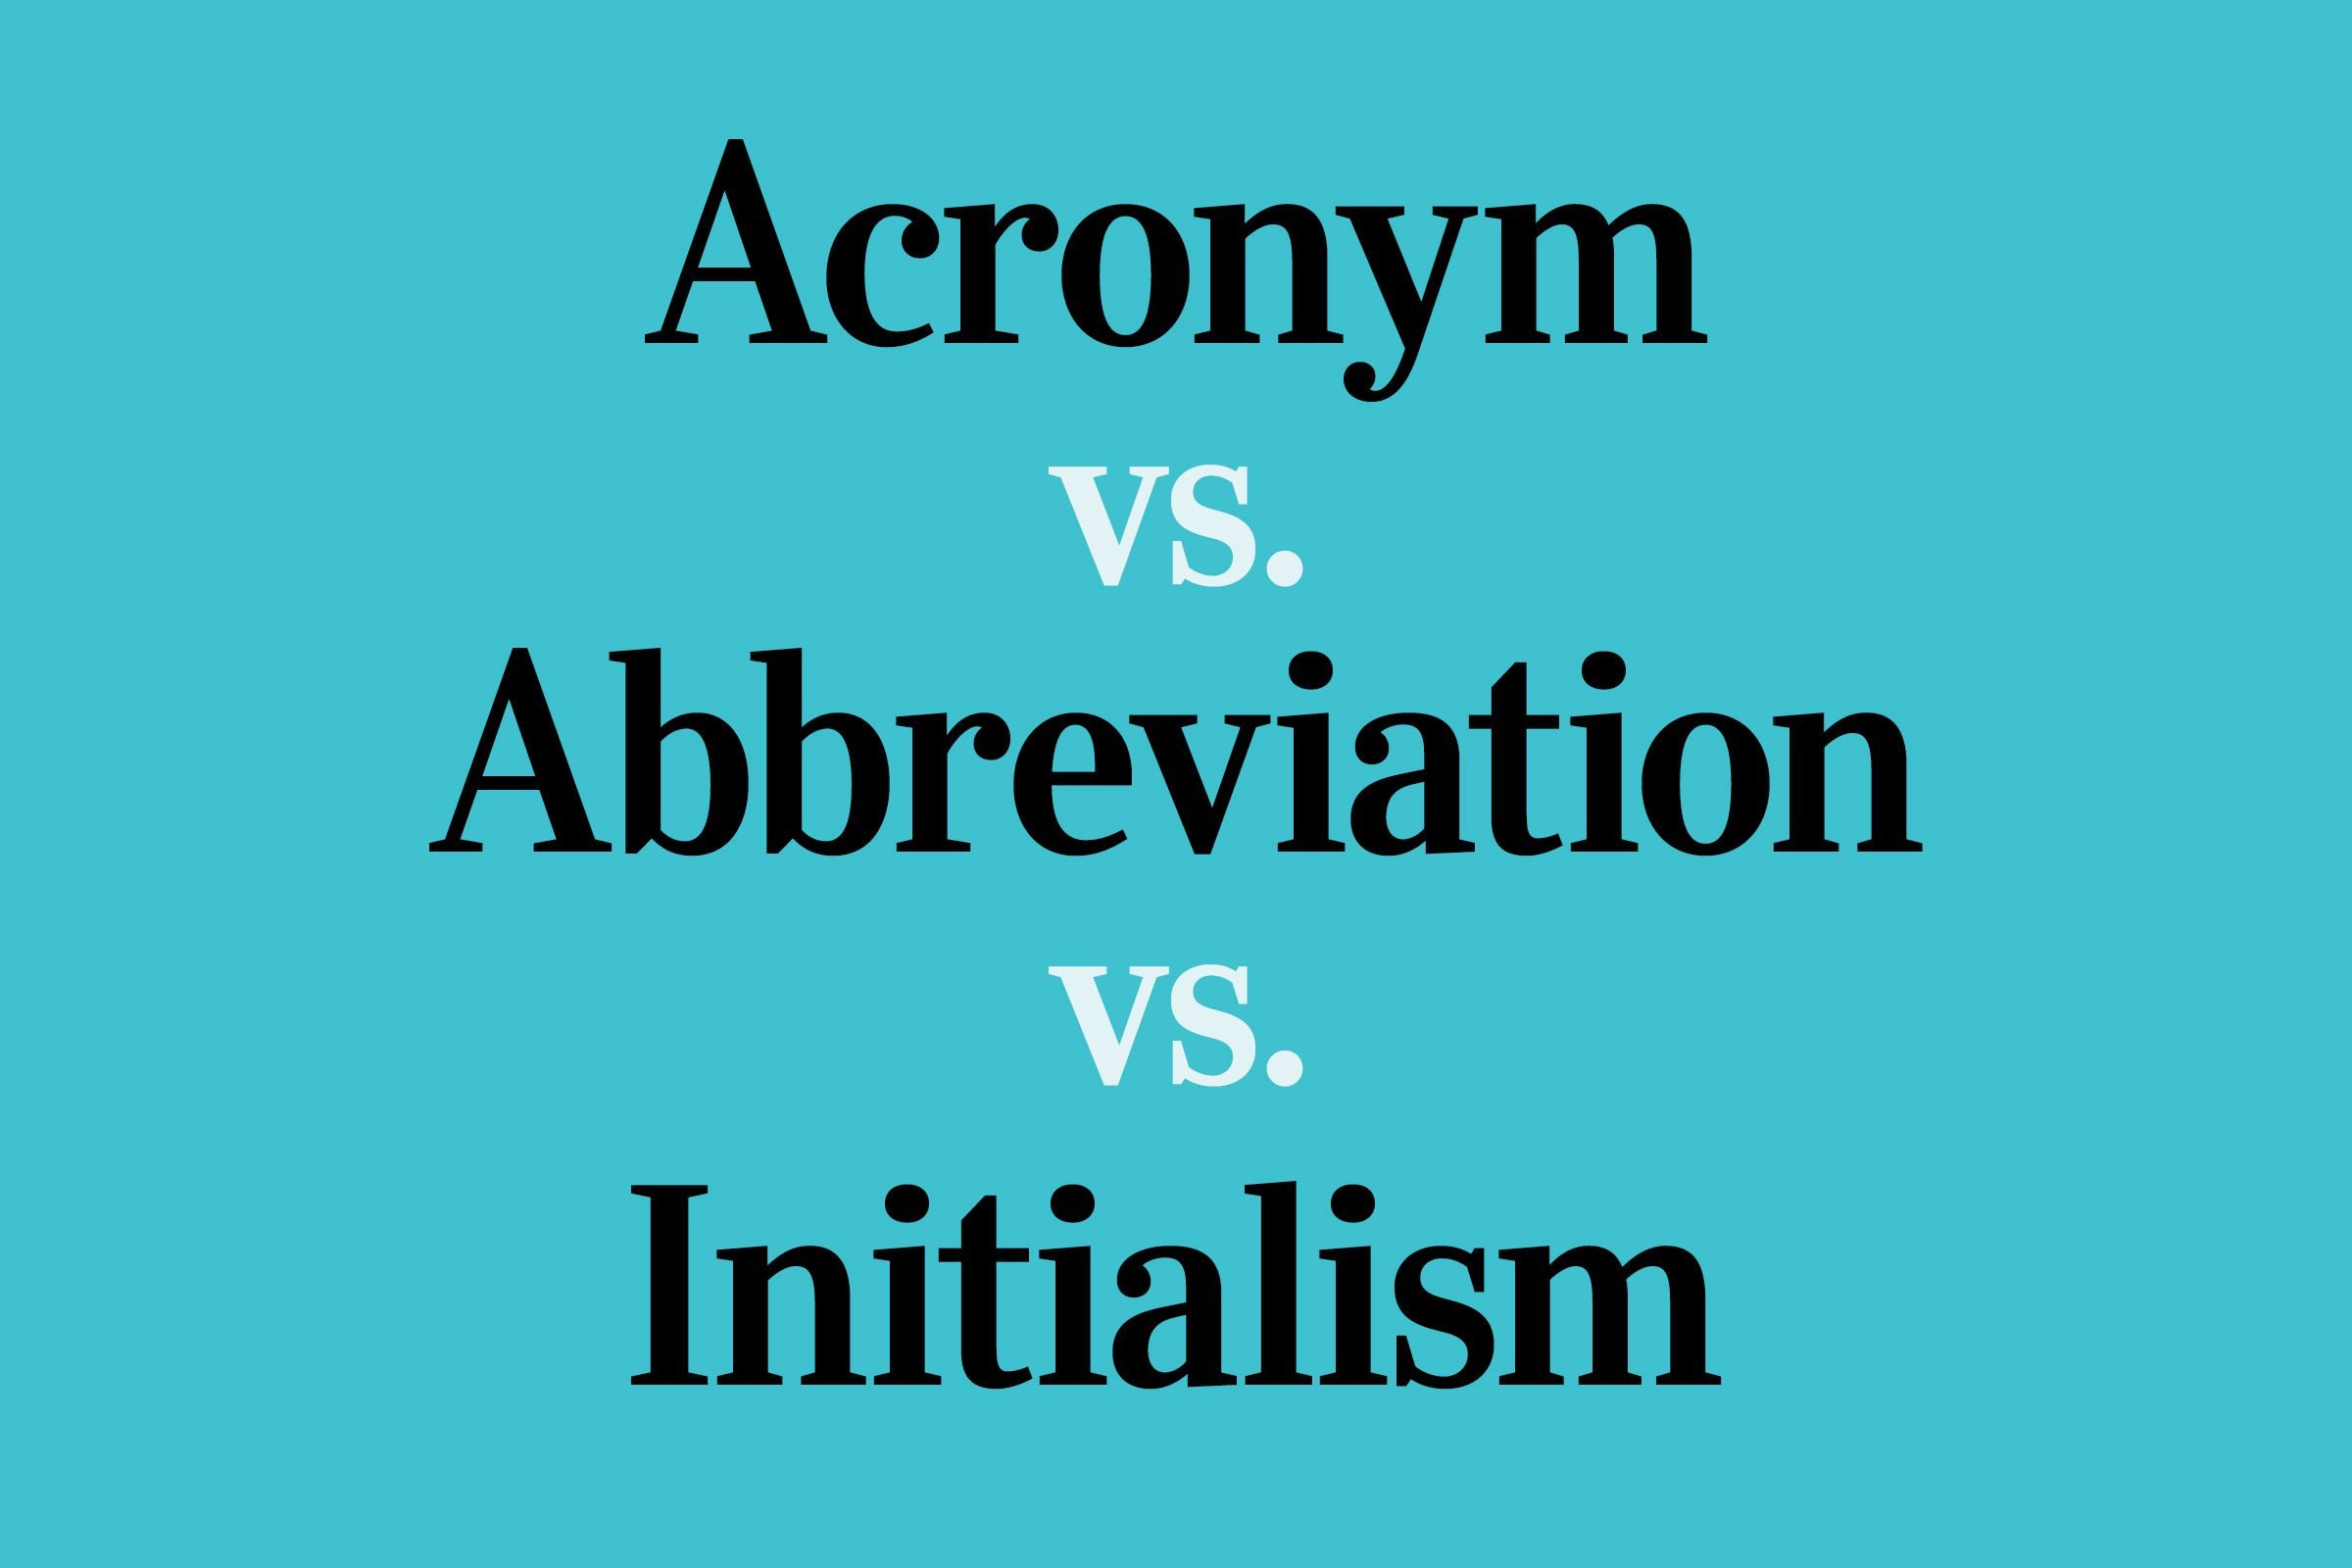 Acronym vs. Abbreviation vs. Initialism